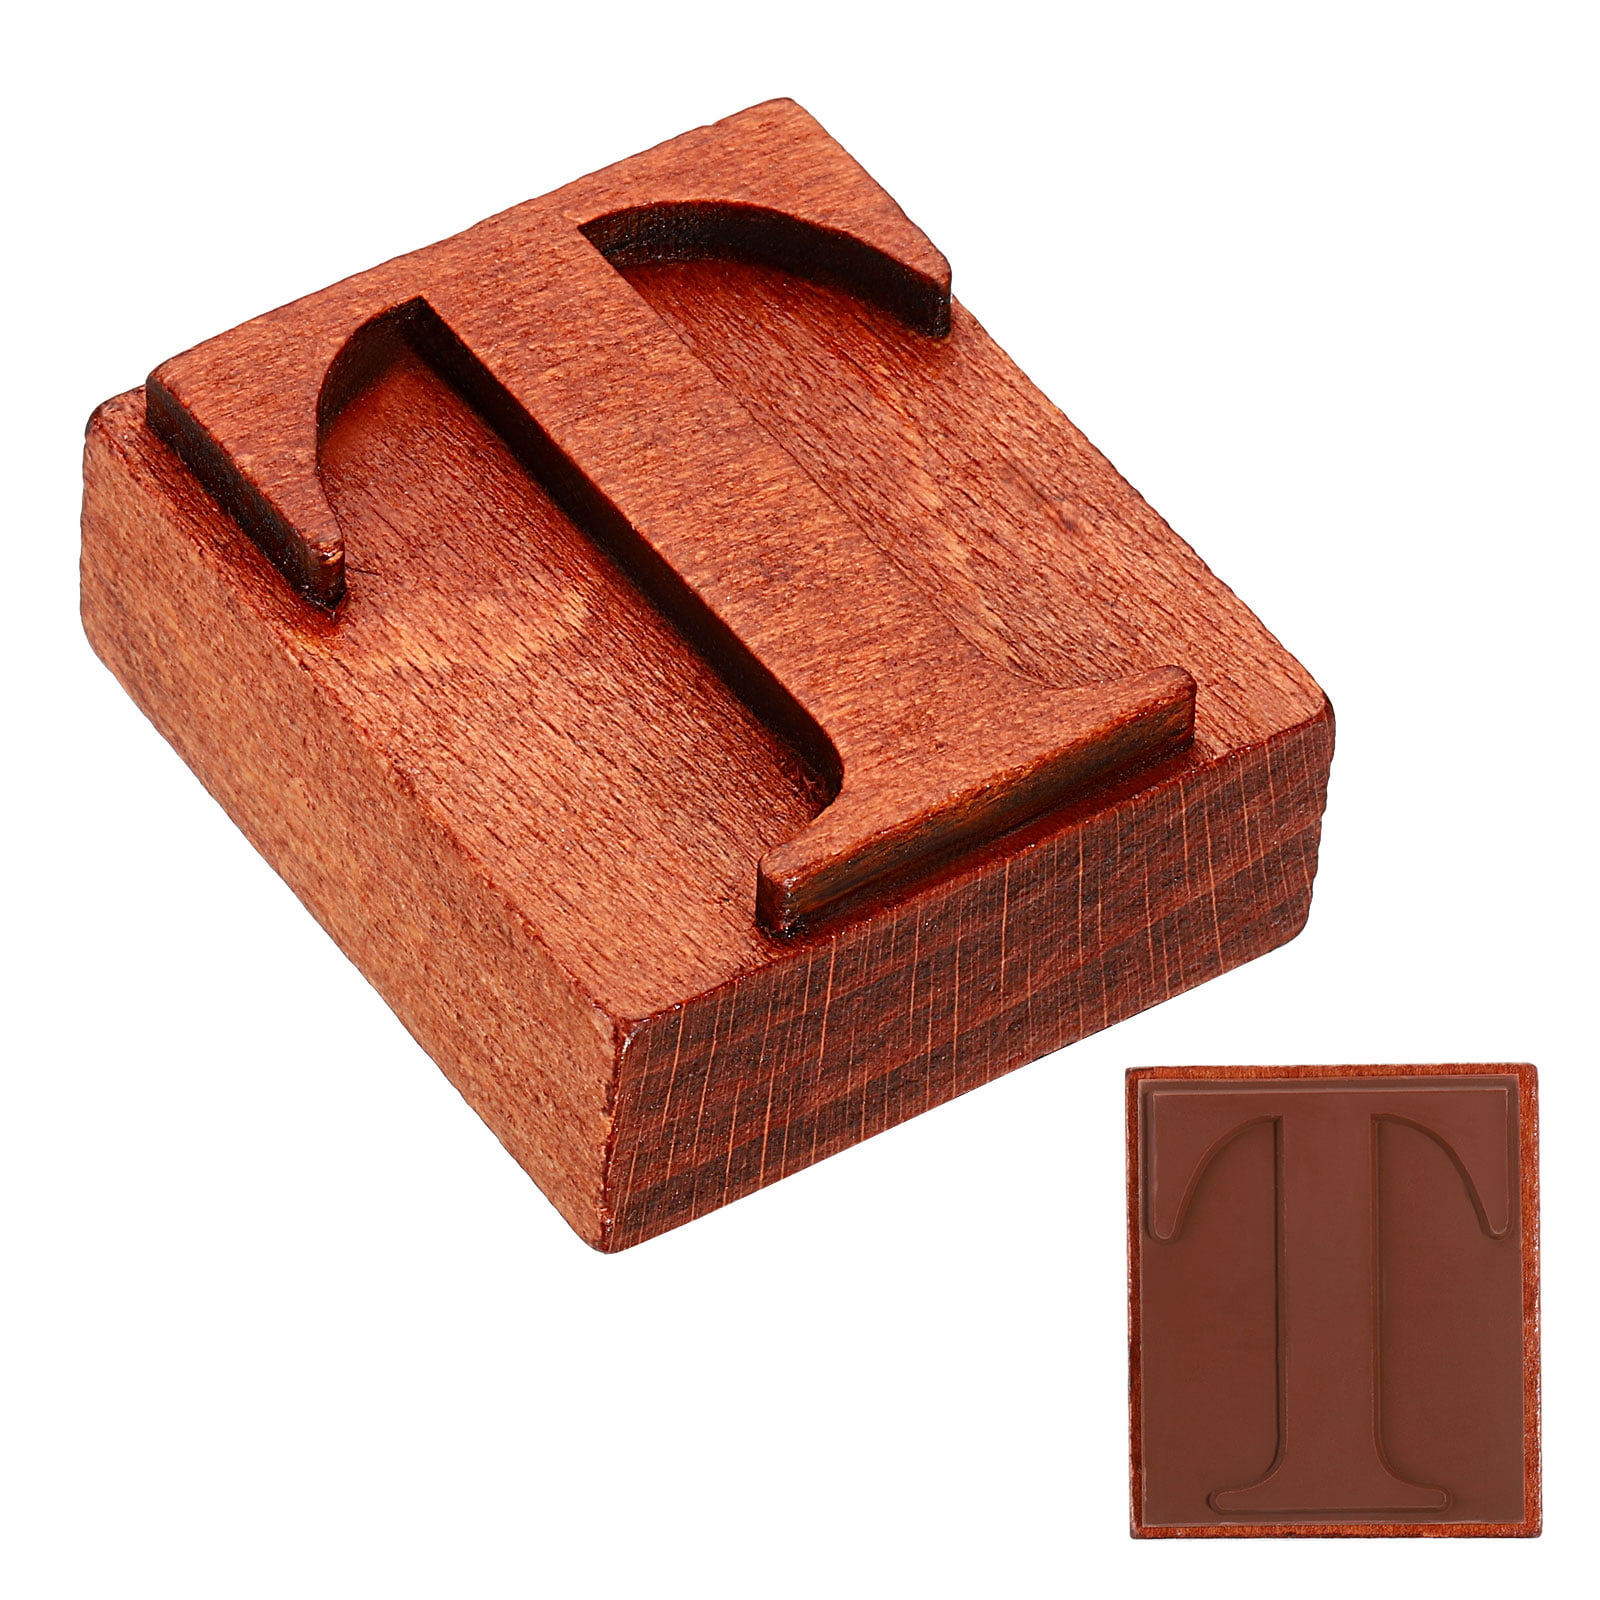 2 sets of Polymer Clay Letter Stamps Mini Alphabet Number Letter Stamp DIY  Craft Tool 